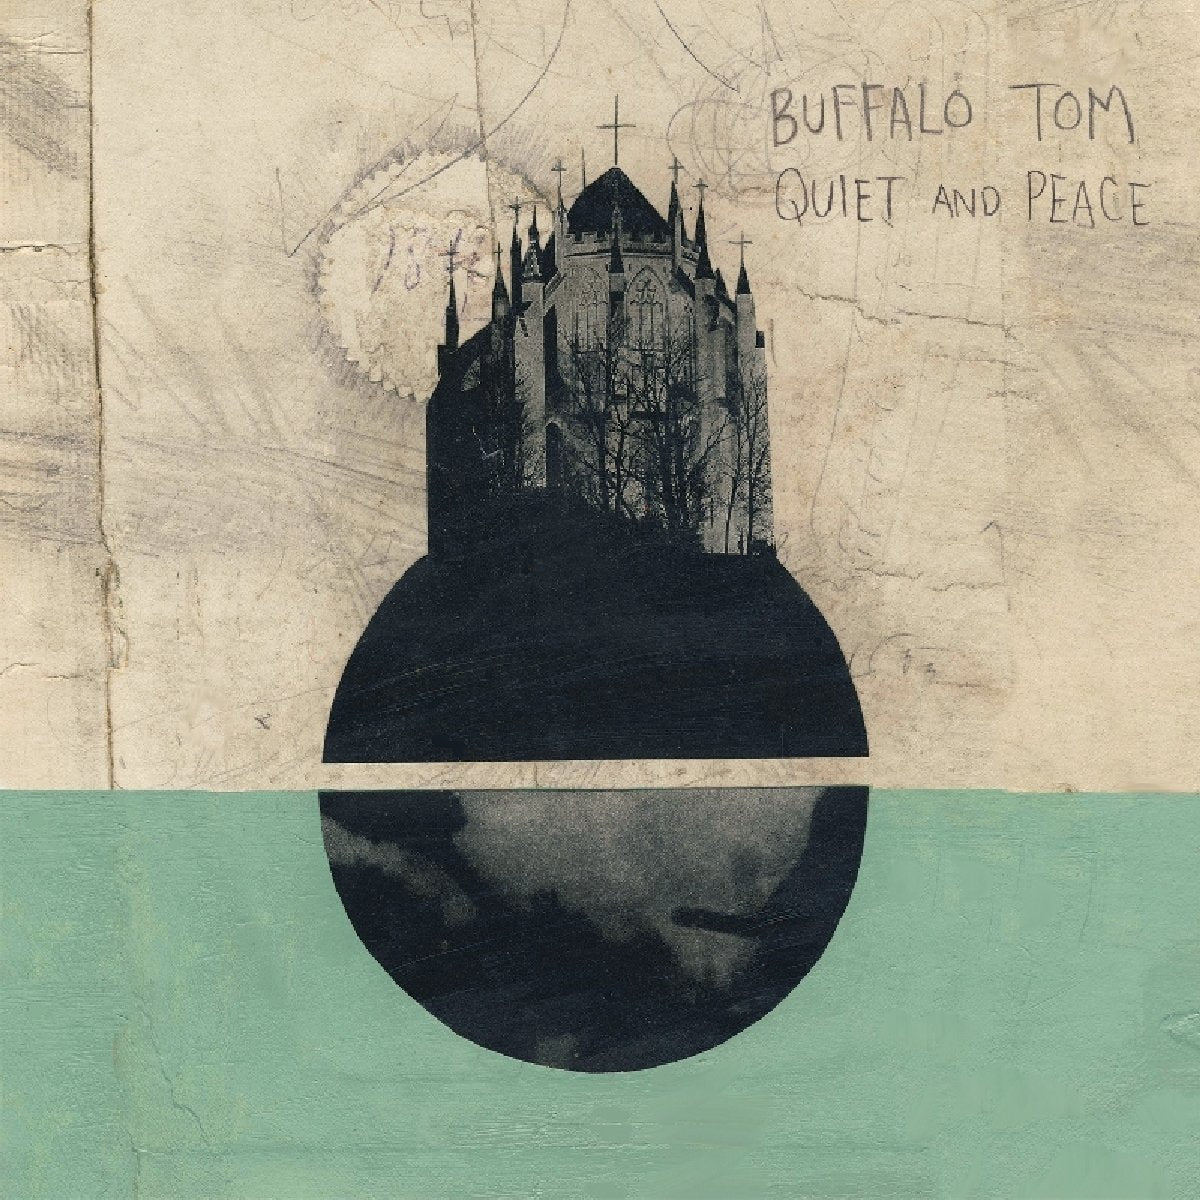 Buffalo Tom - Quiet and Peace - CD